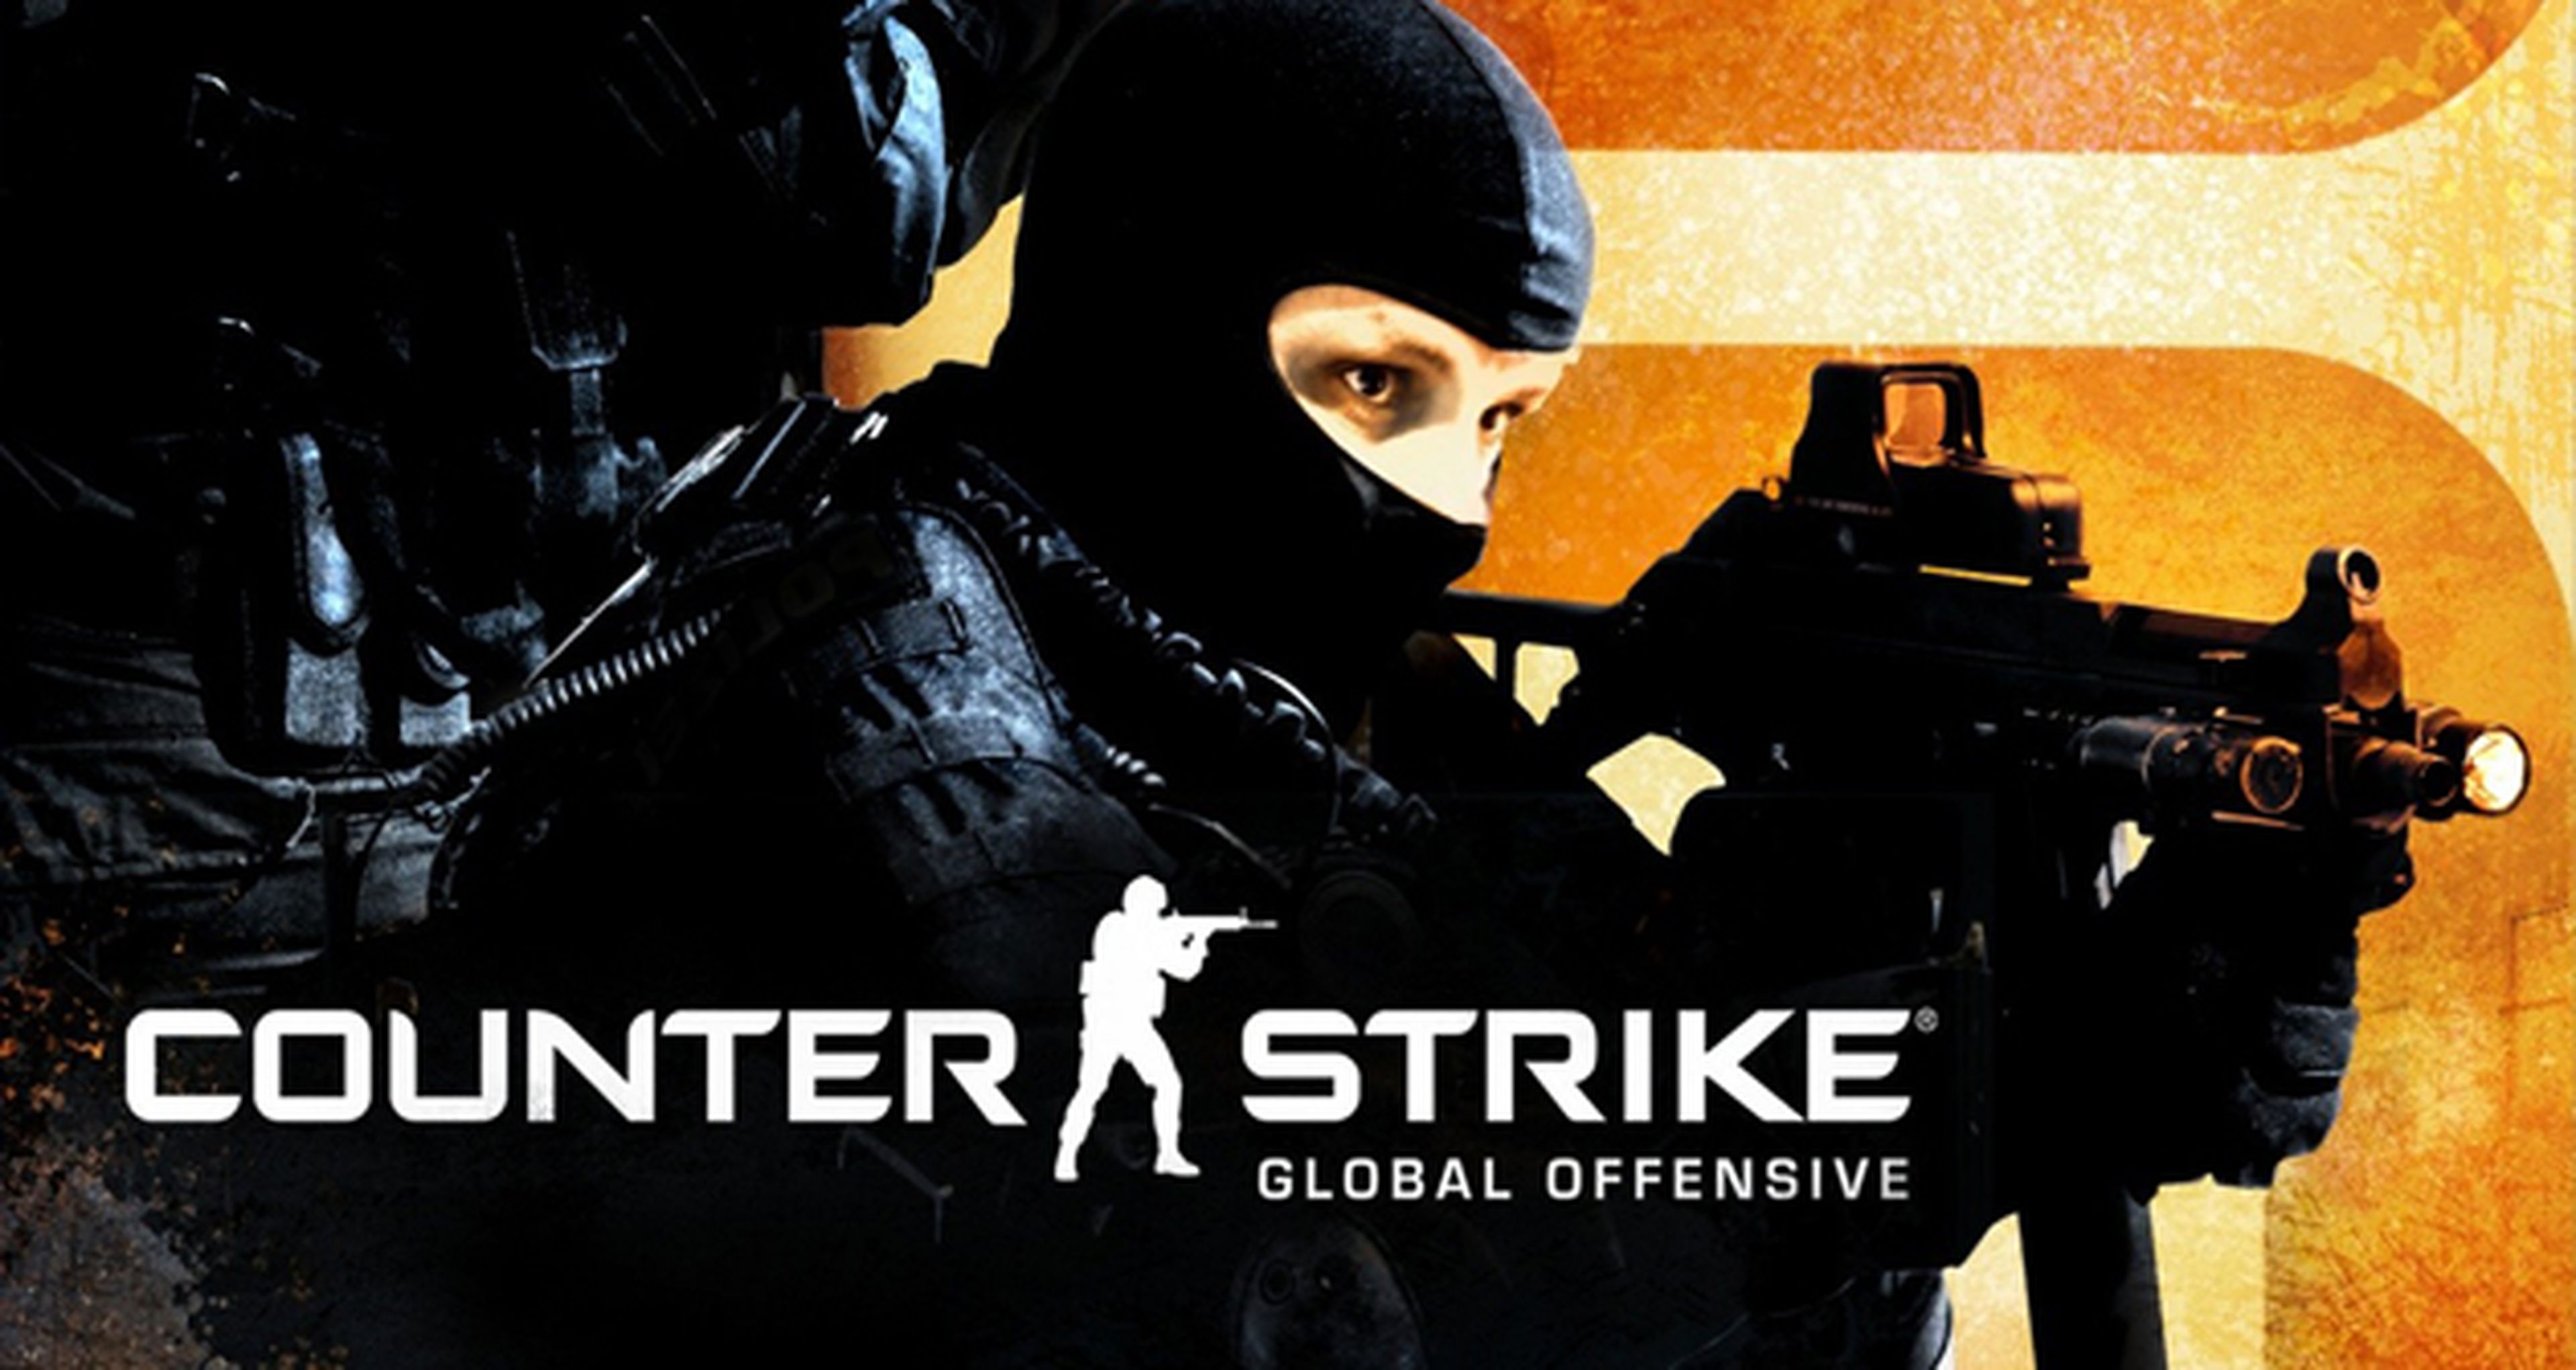 Counter-Strike Global Offensive, analizado